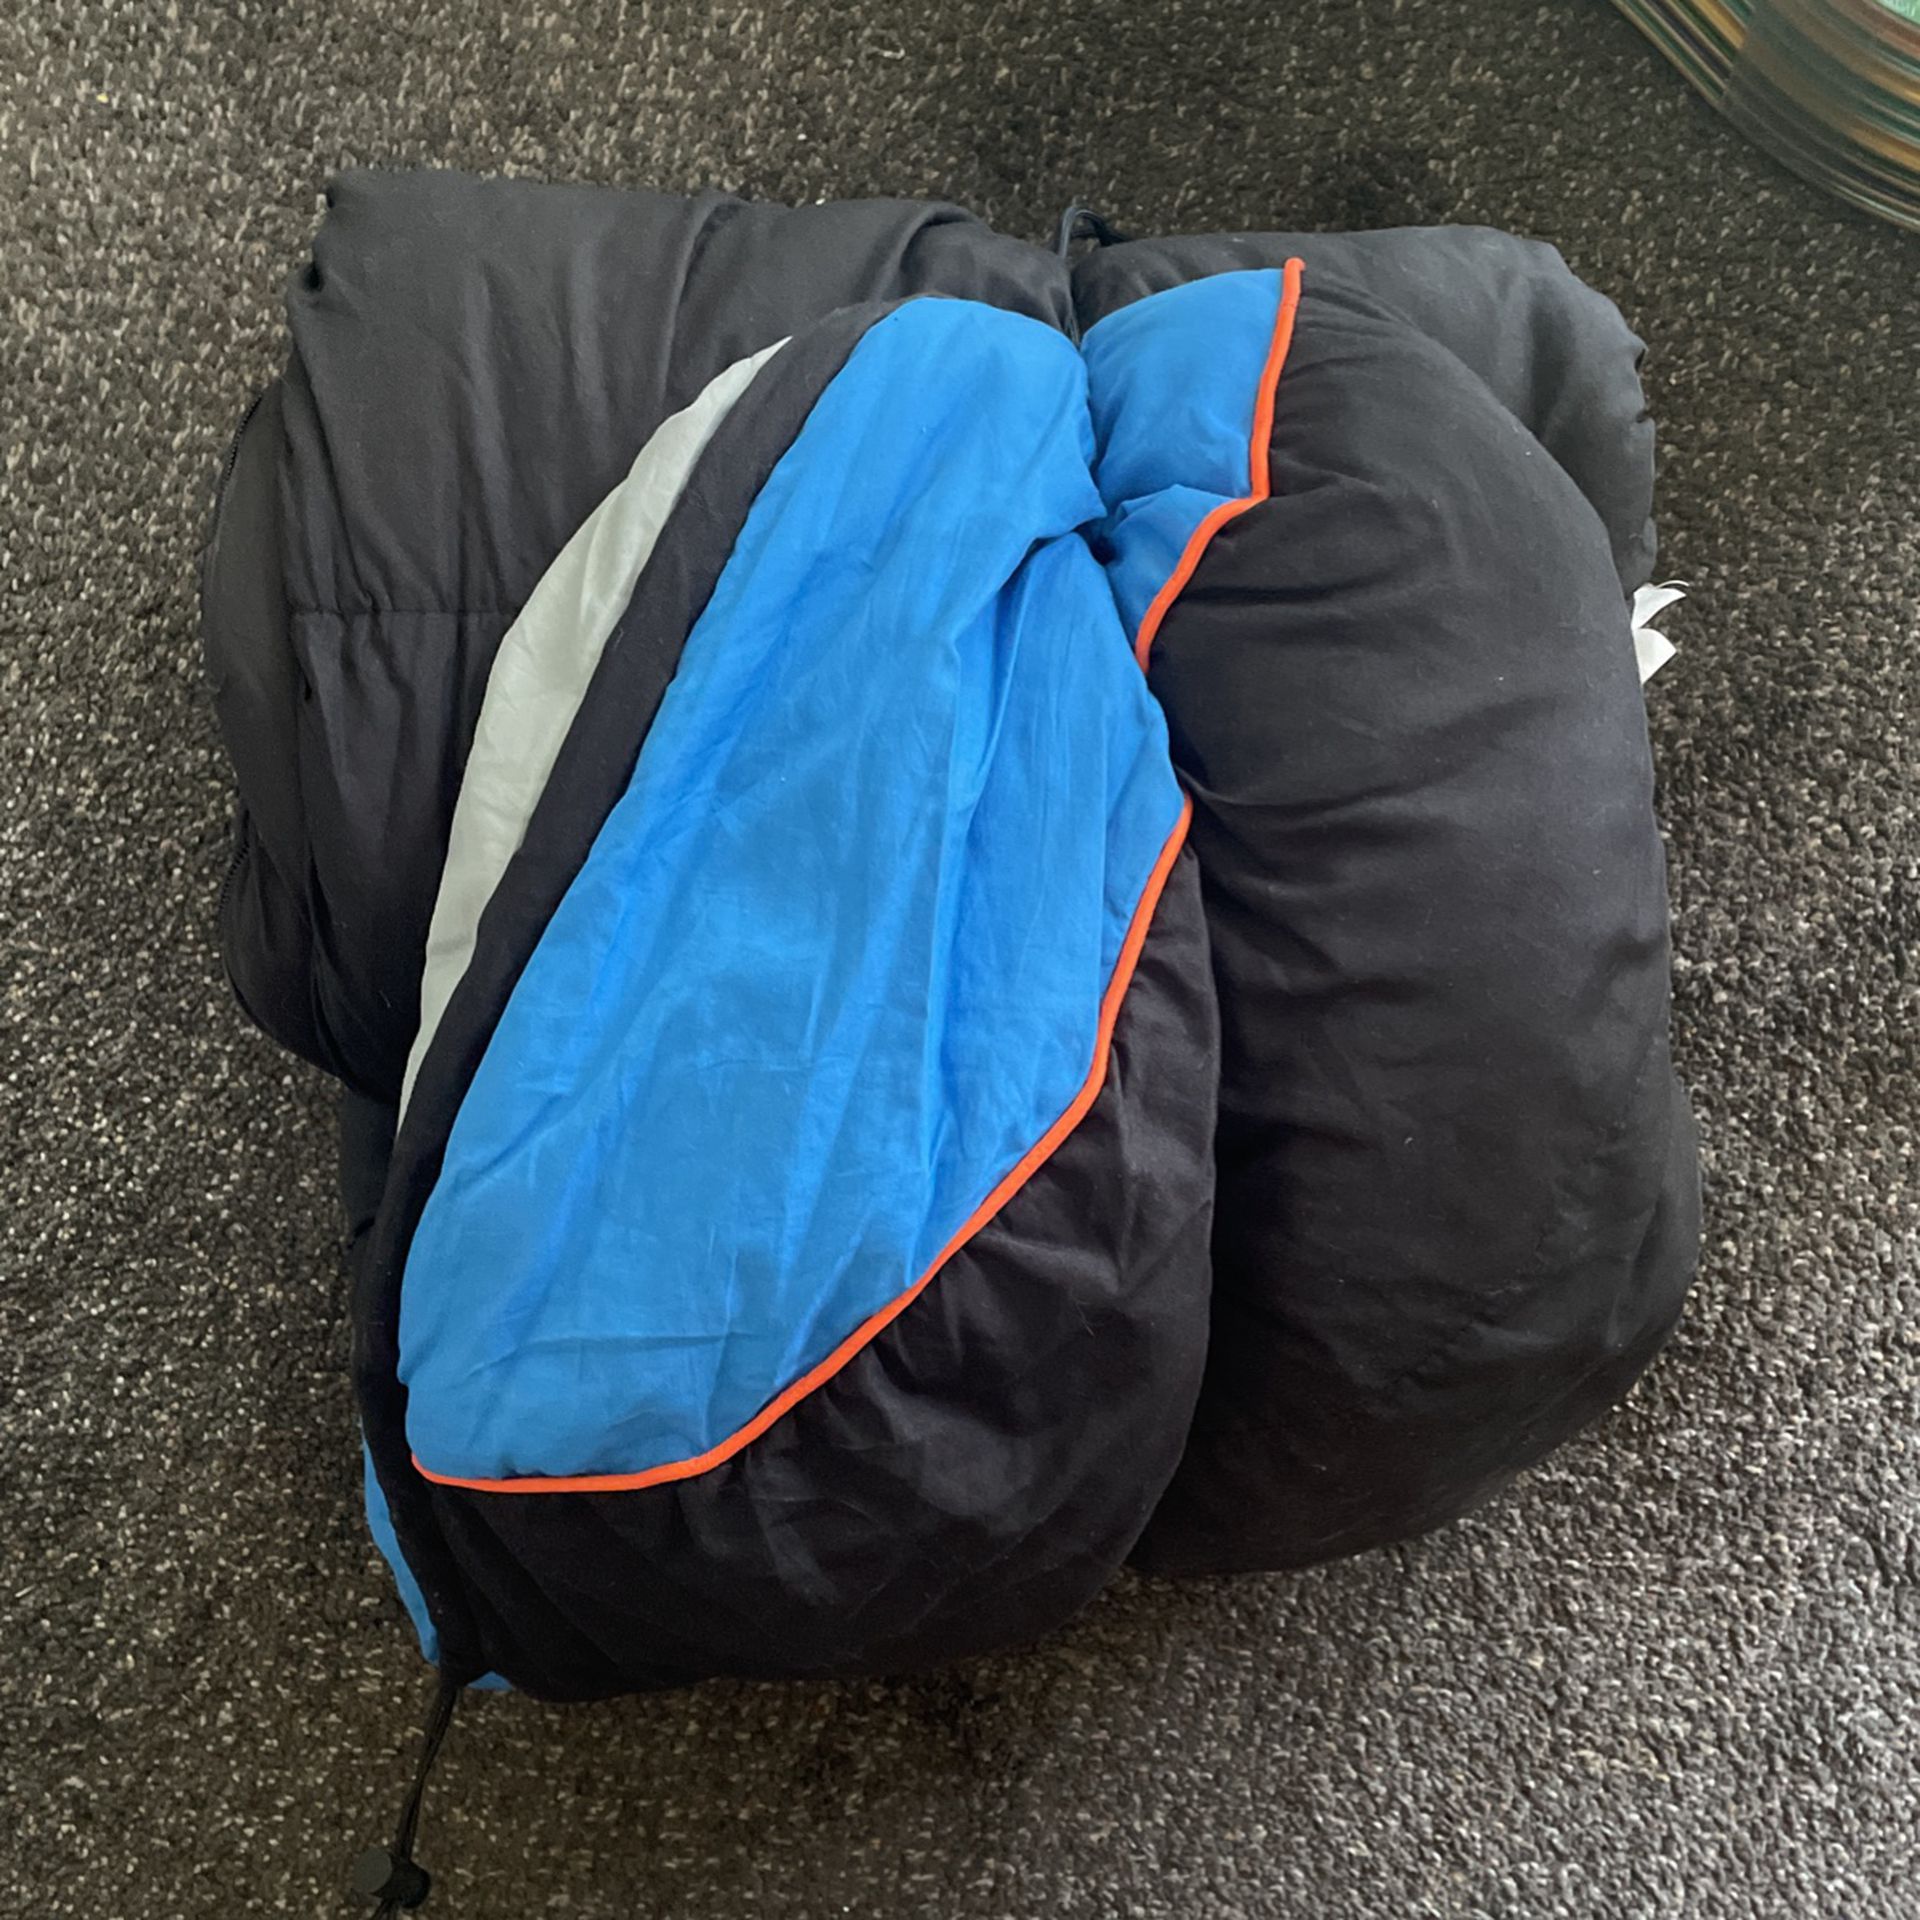 0 Degree Sleeping Bag